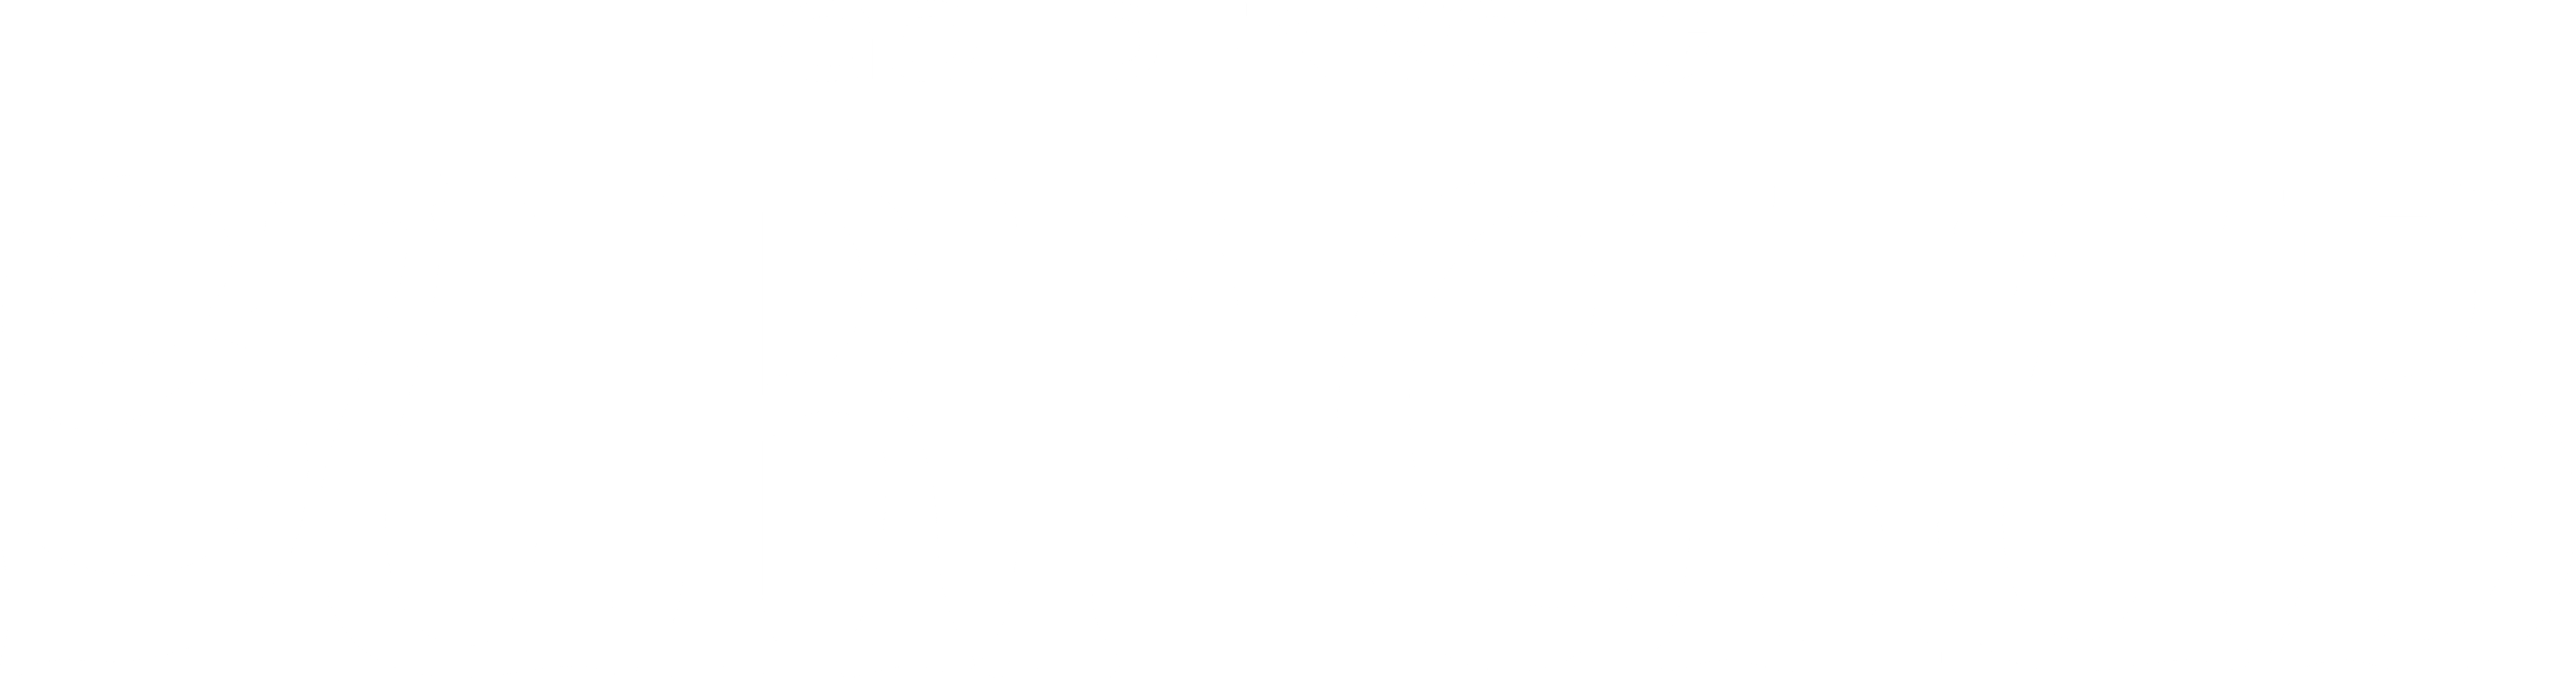 Goldenvoice Surf Club